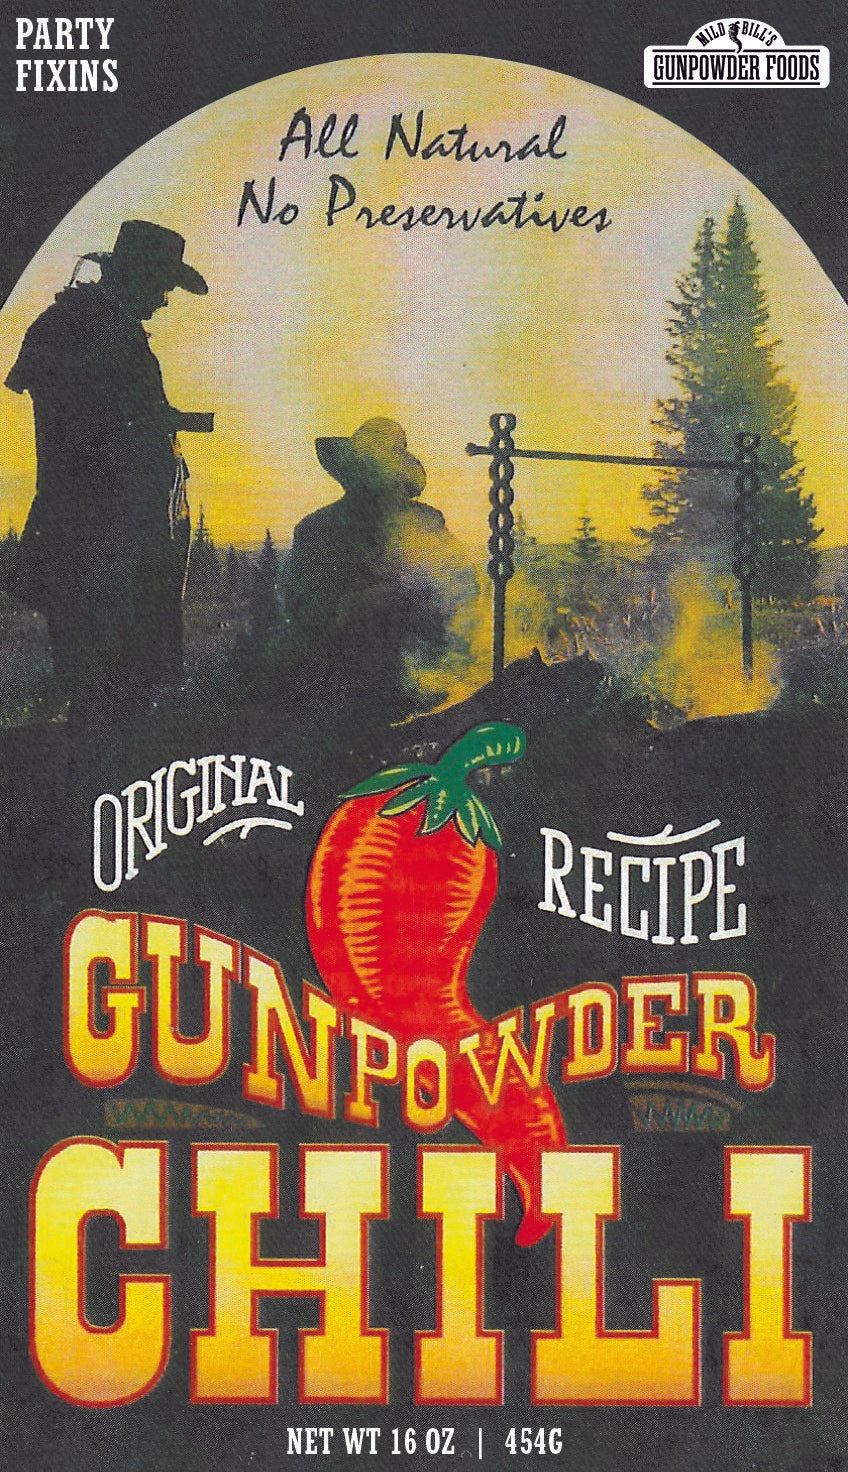 Gunpowder Chili Party Fixins